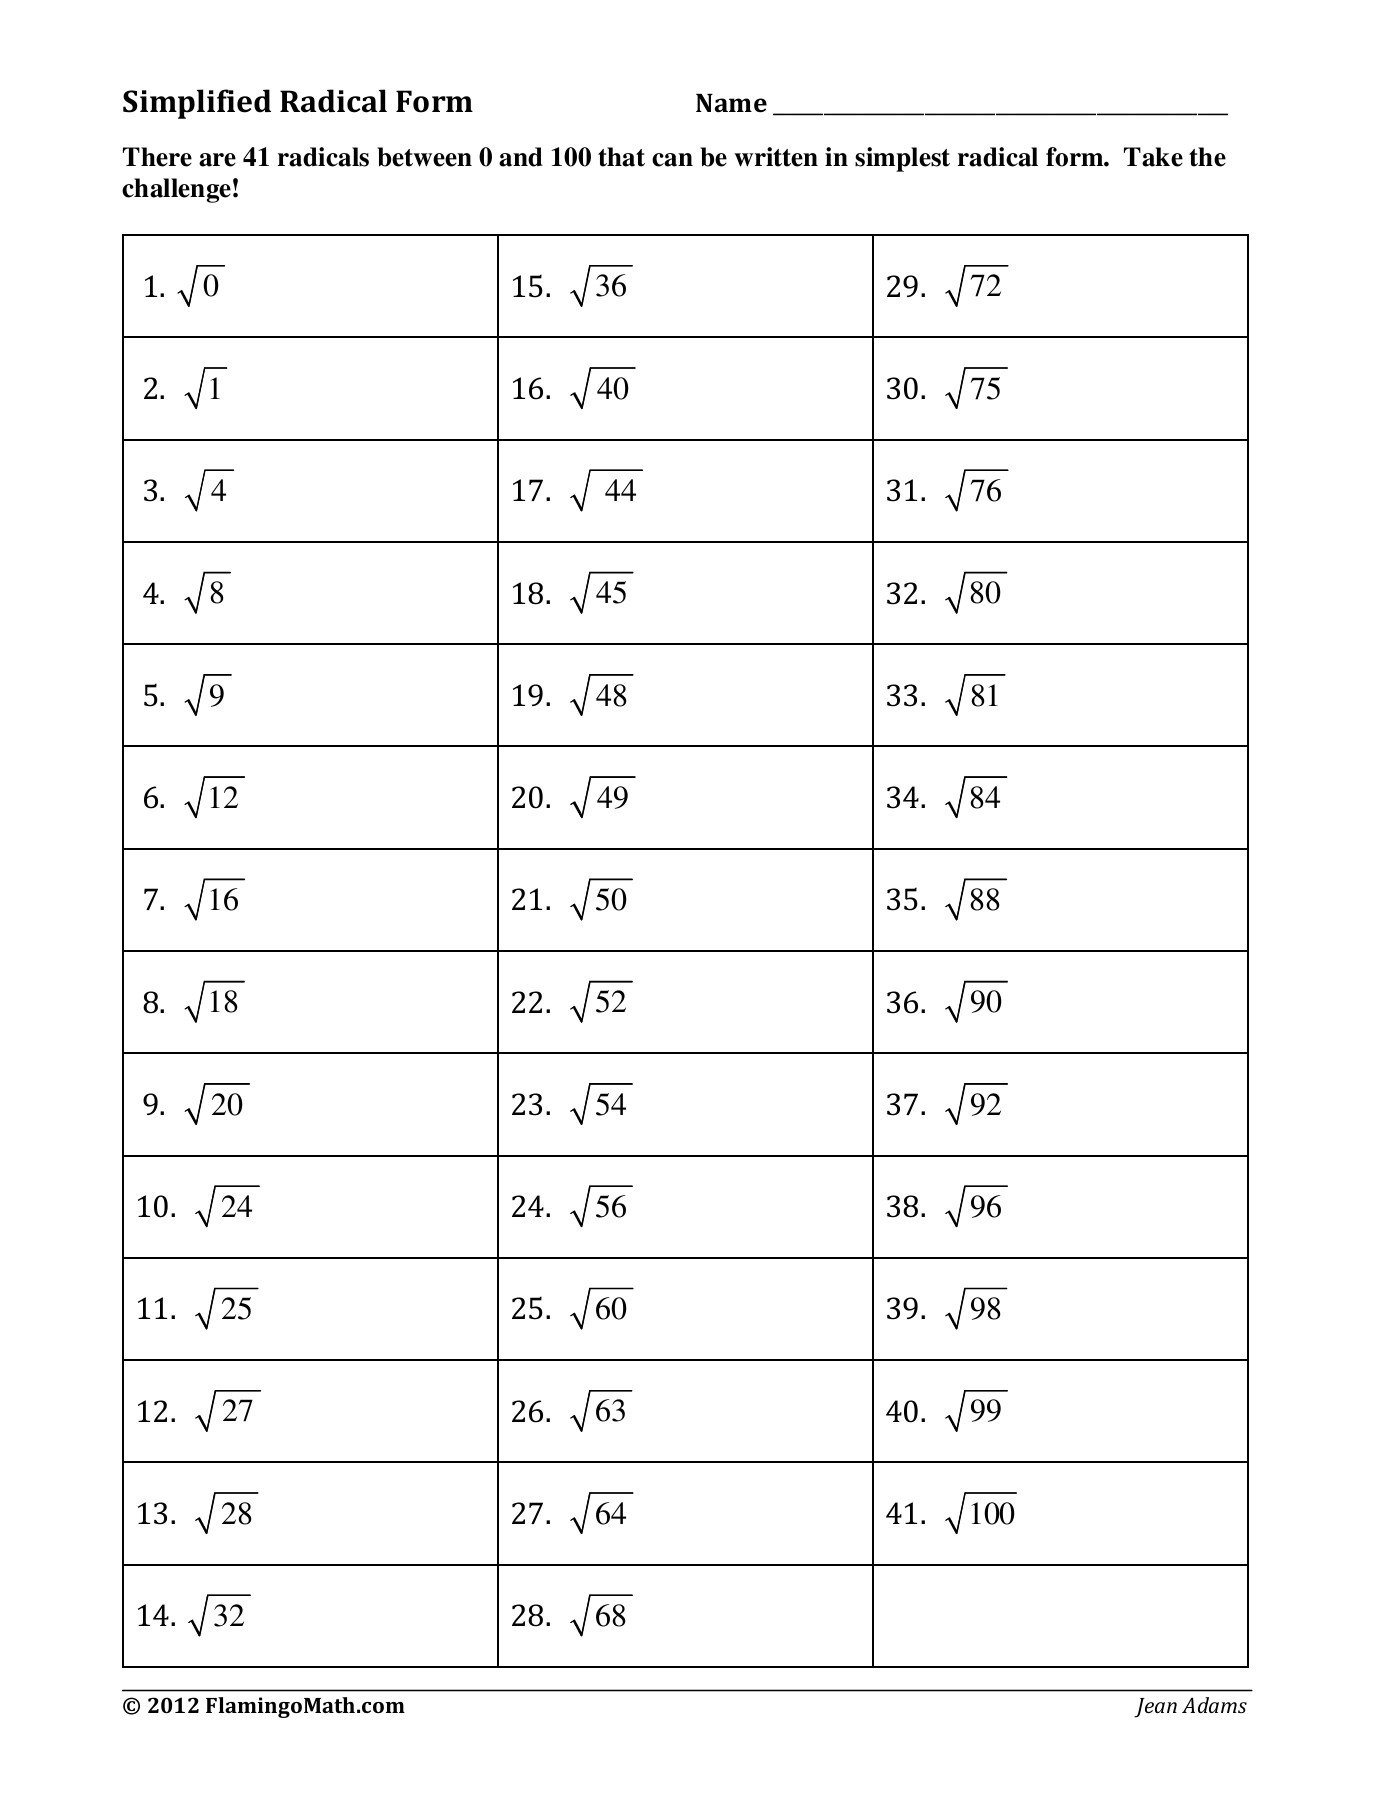 Simplifying Radicals Worksheet Pdf Simplified Radical form High School Math Help Pages 1 3